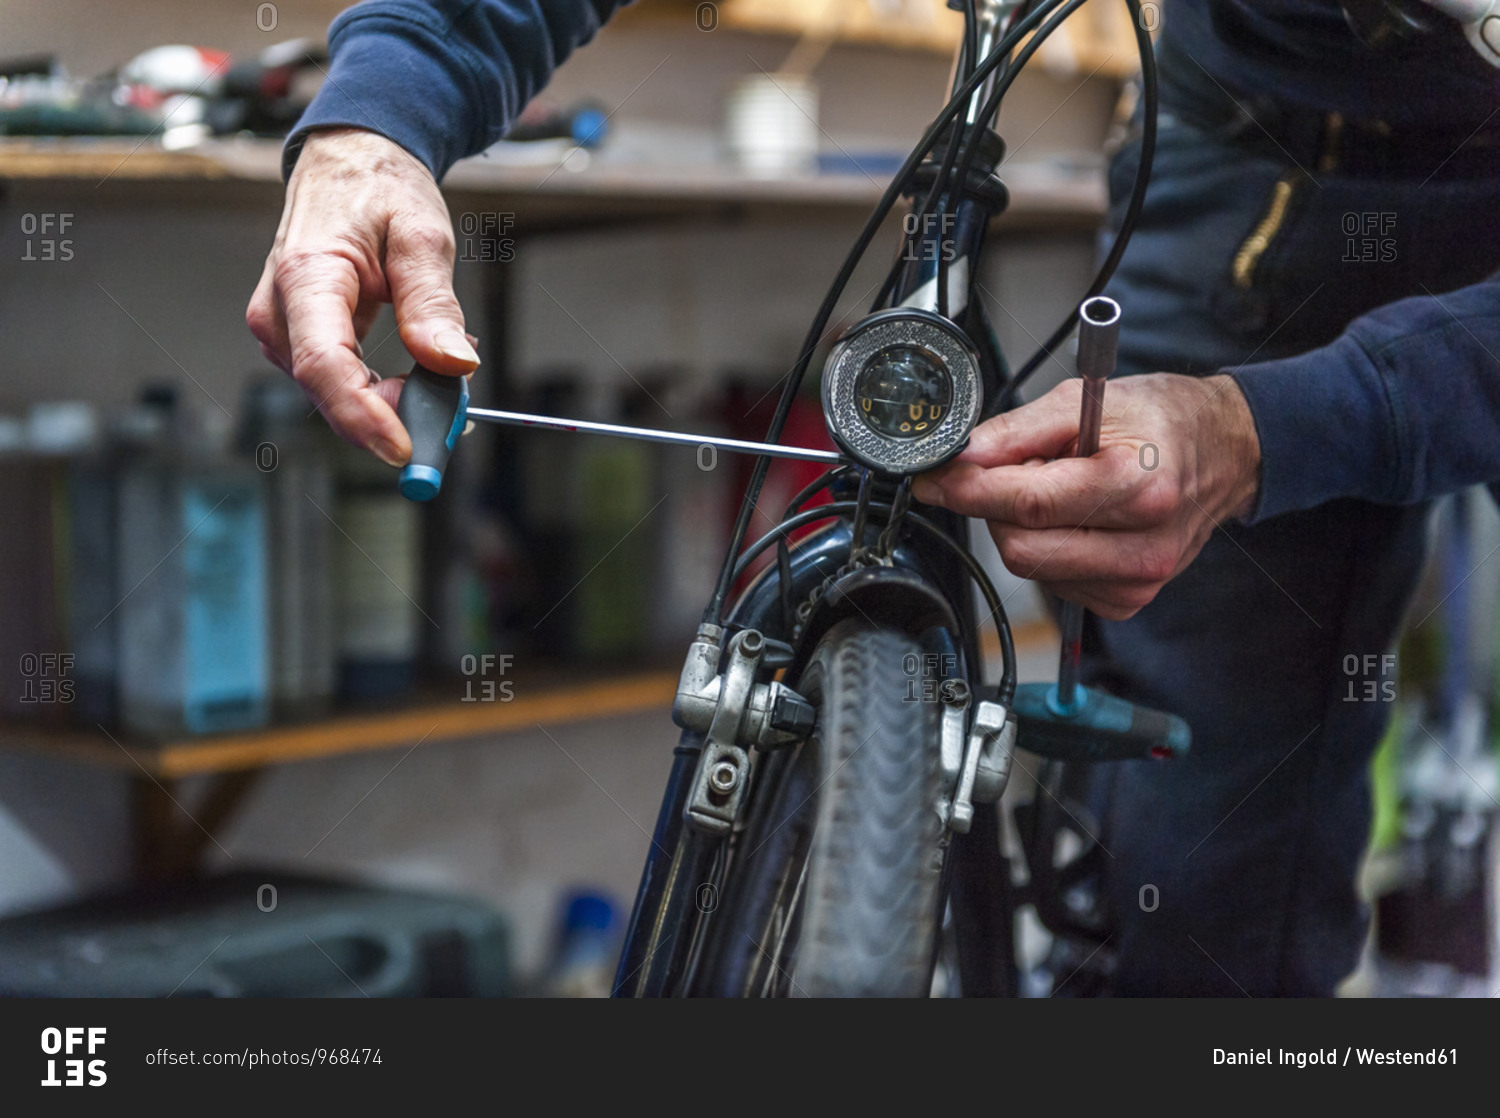 Bicycle mechanic working in bike shop